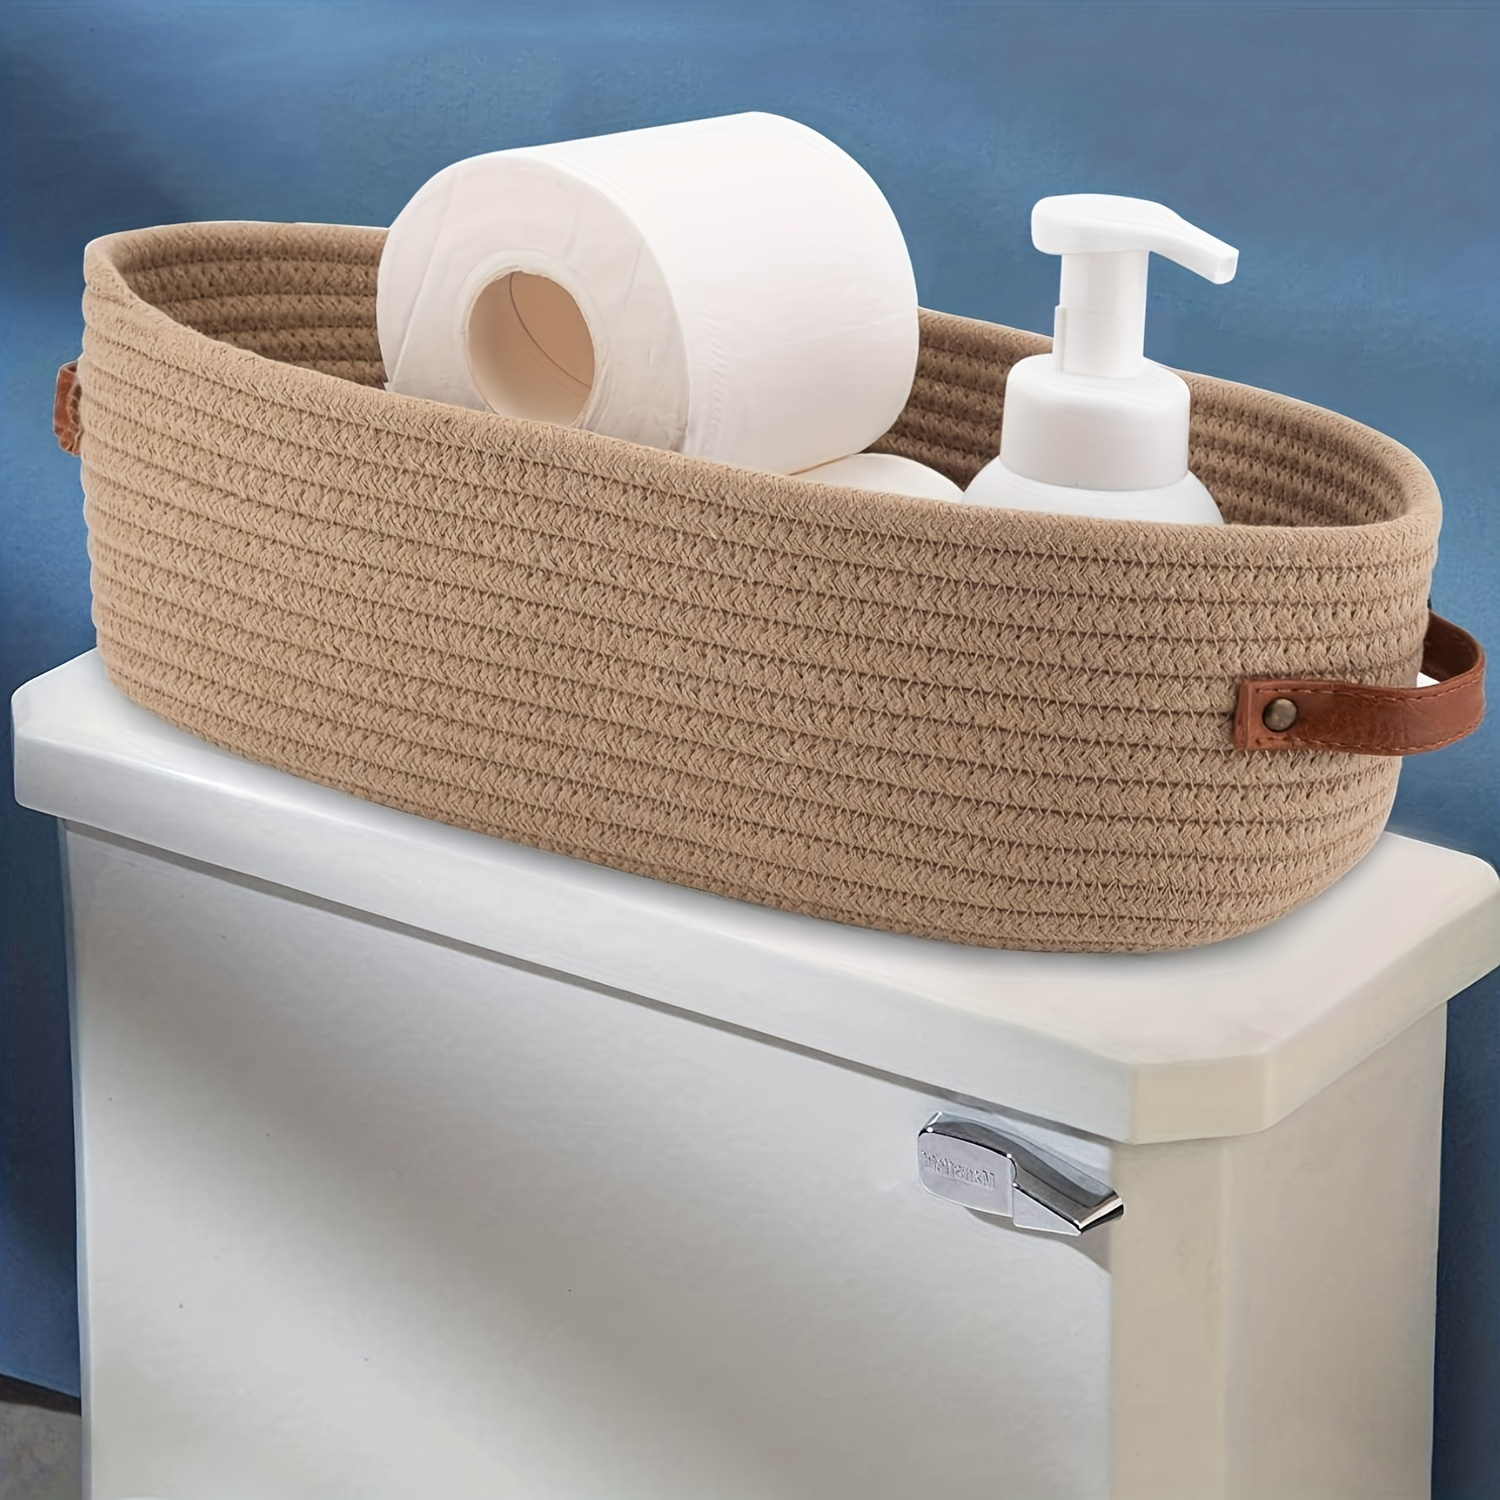 

Versatile Woven Storage Basket With Dual Handles - Perfect For Desktop Organization & Toilet Paper Holder